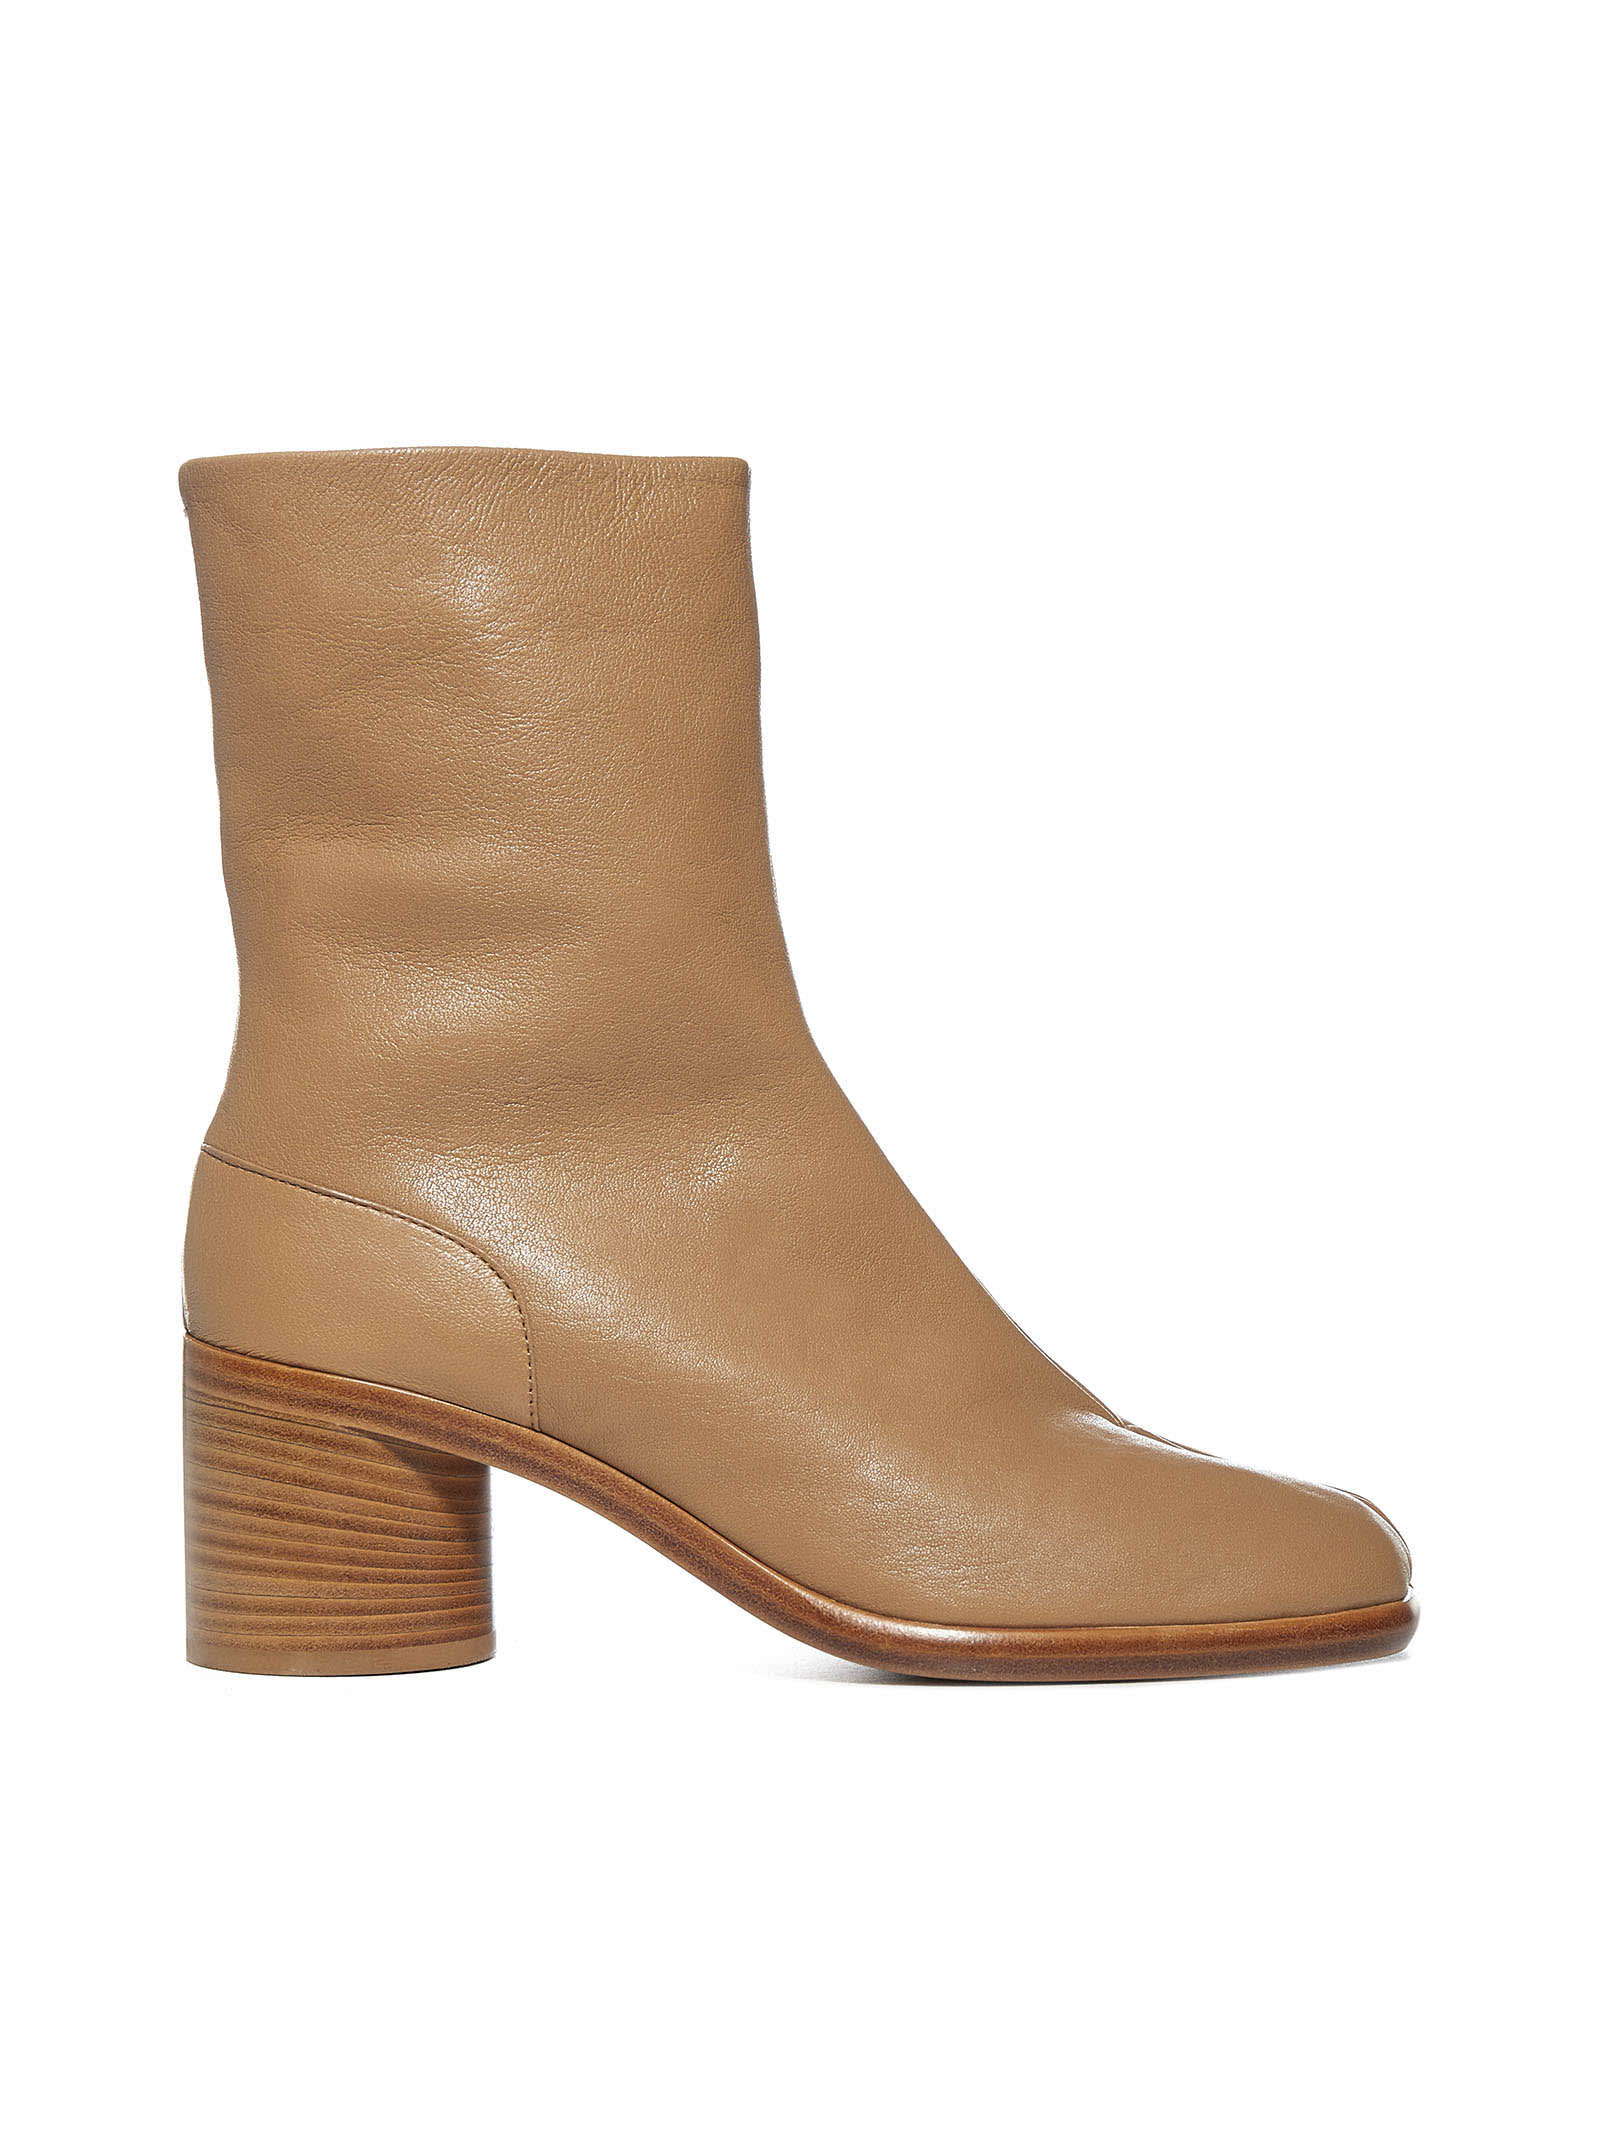 Buy Maison Margiela Tabi Leather Ankle Boots online, shop Maison Margiela shoes with free shipping